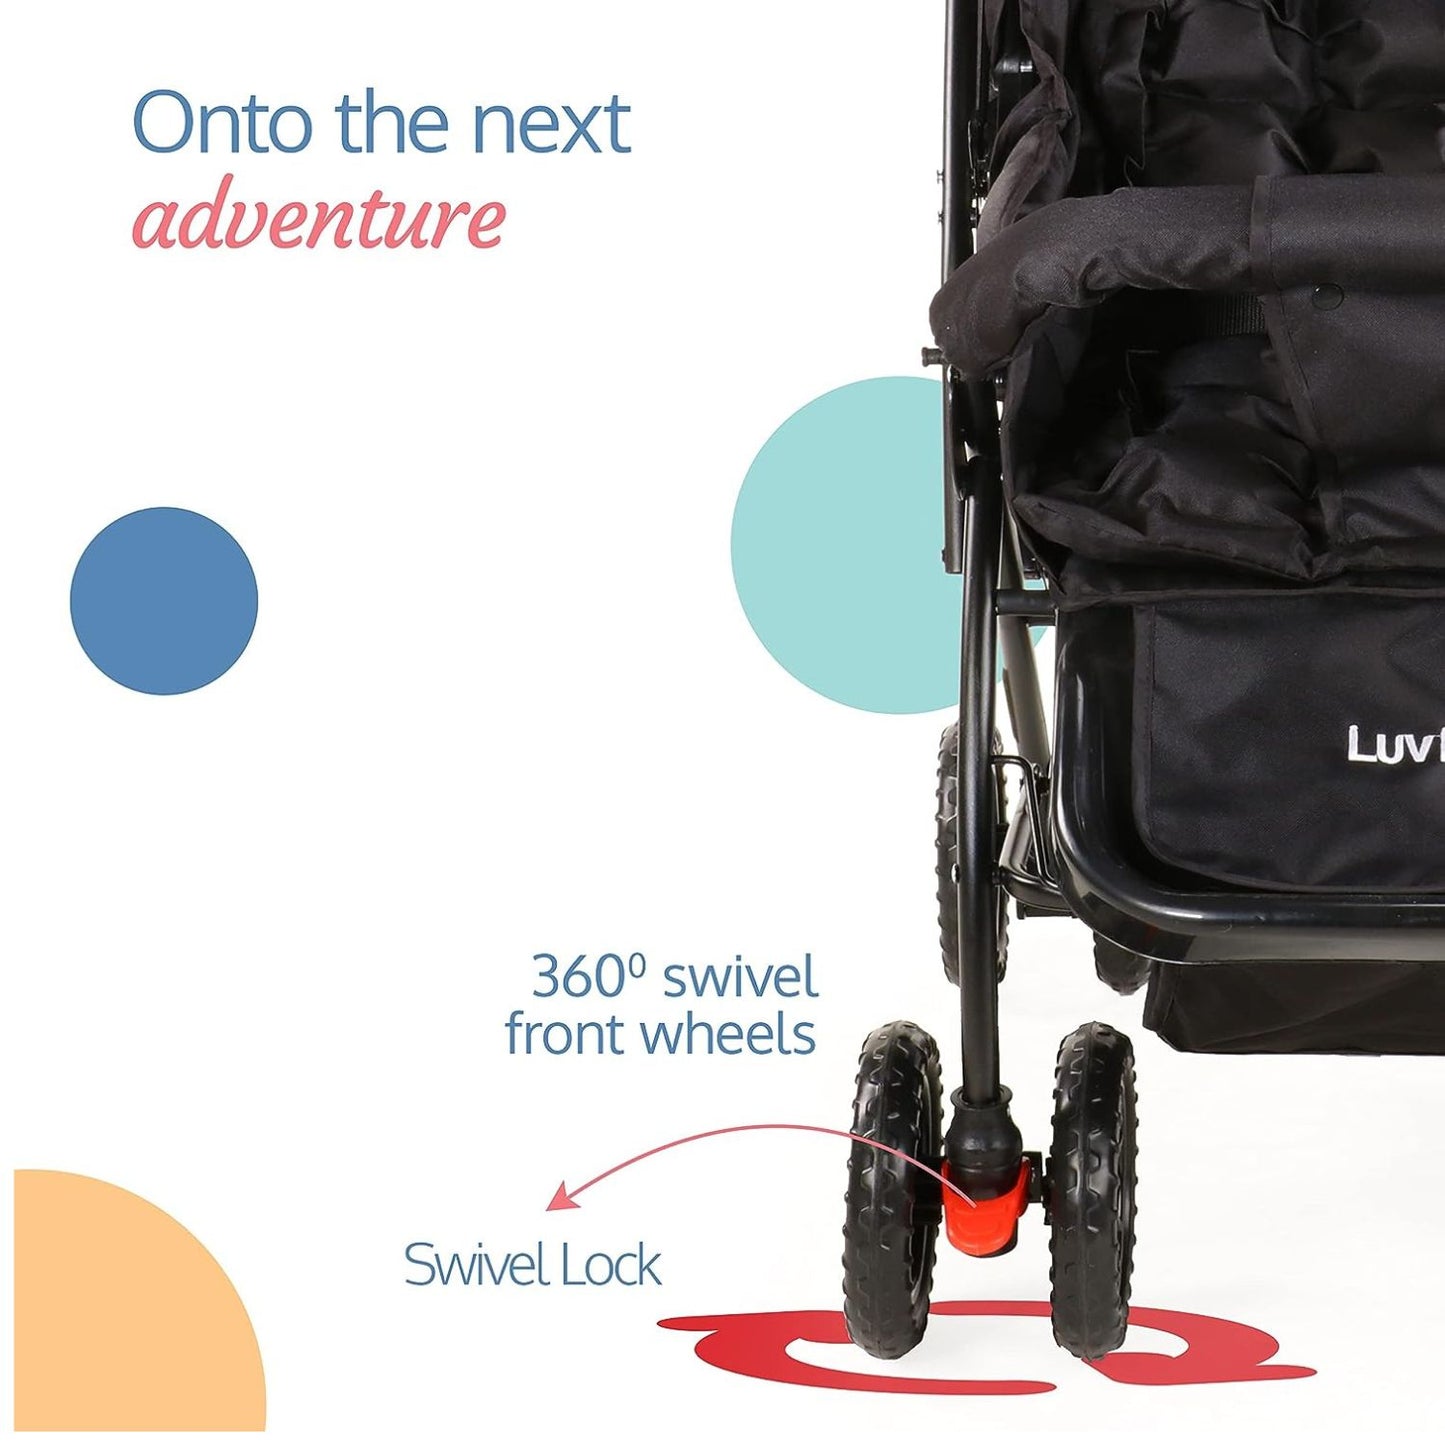 LuvLap  Baby  pramStroller for 0-3 Years: Lightweight, Adjustable Backrest, 360° Wheel, Spacious Storage, Reversible Handlebar I 18305 - Black